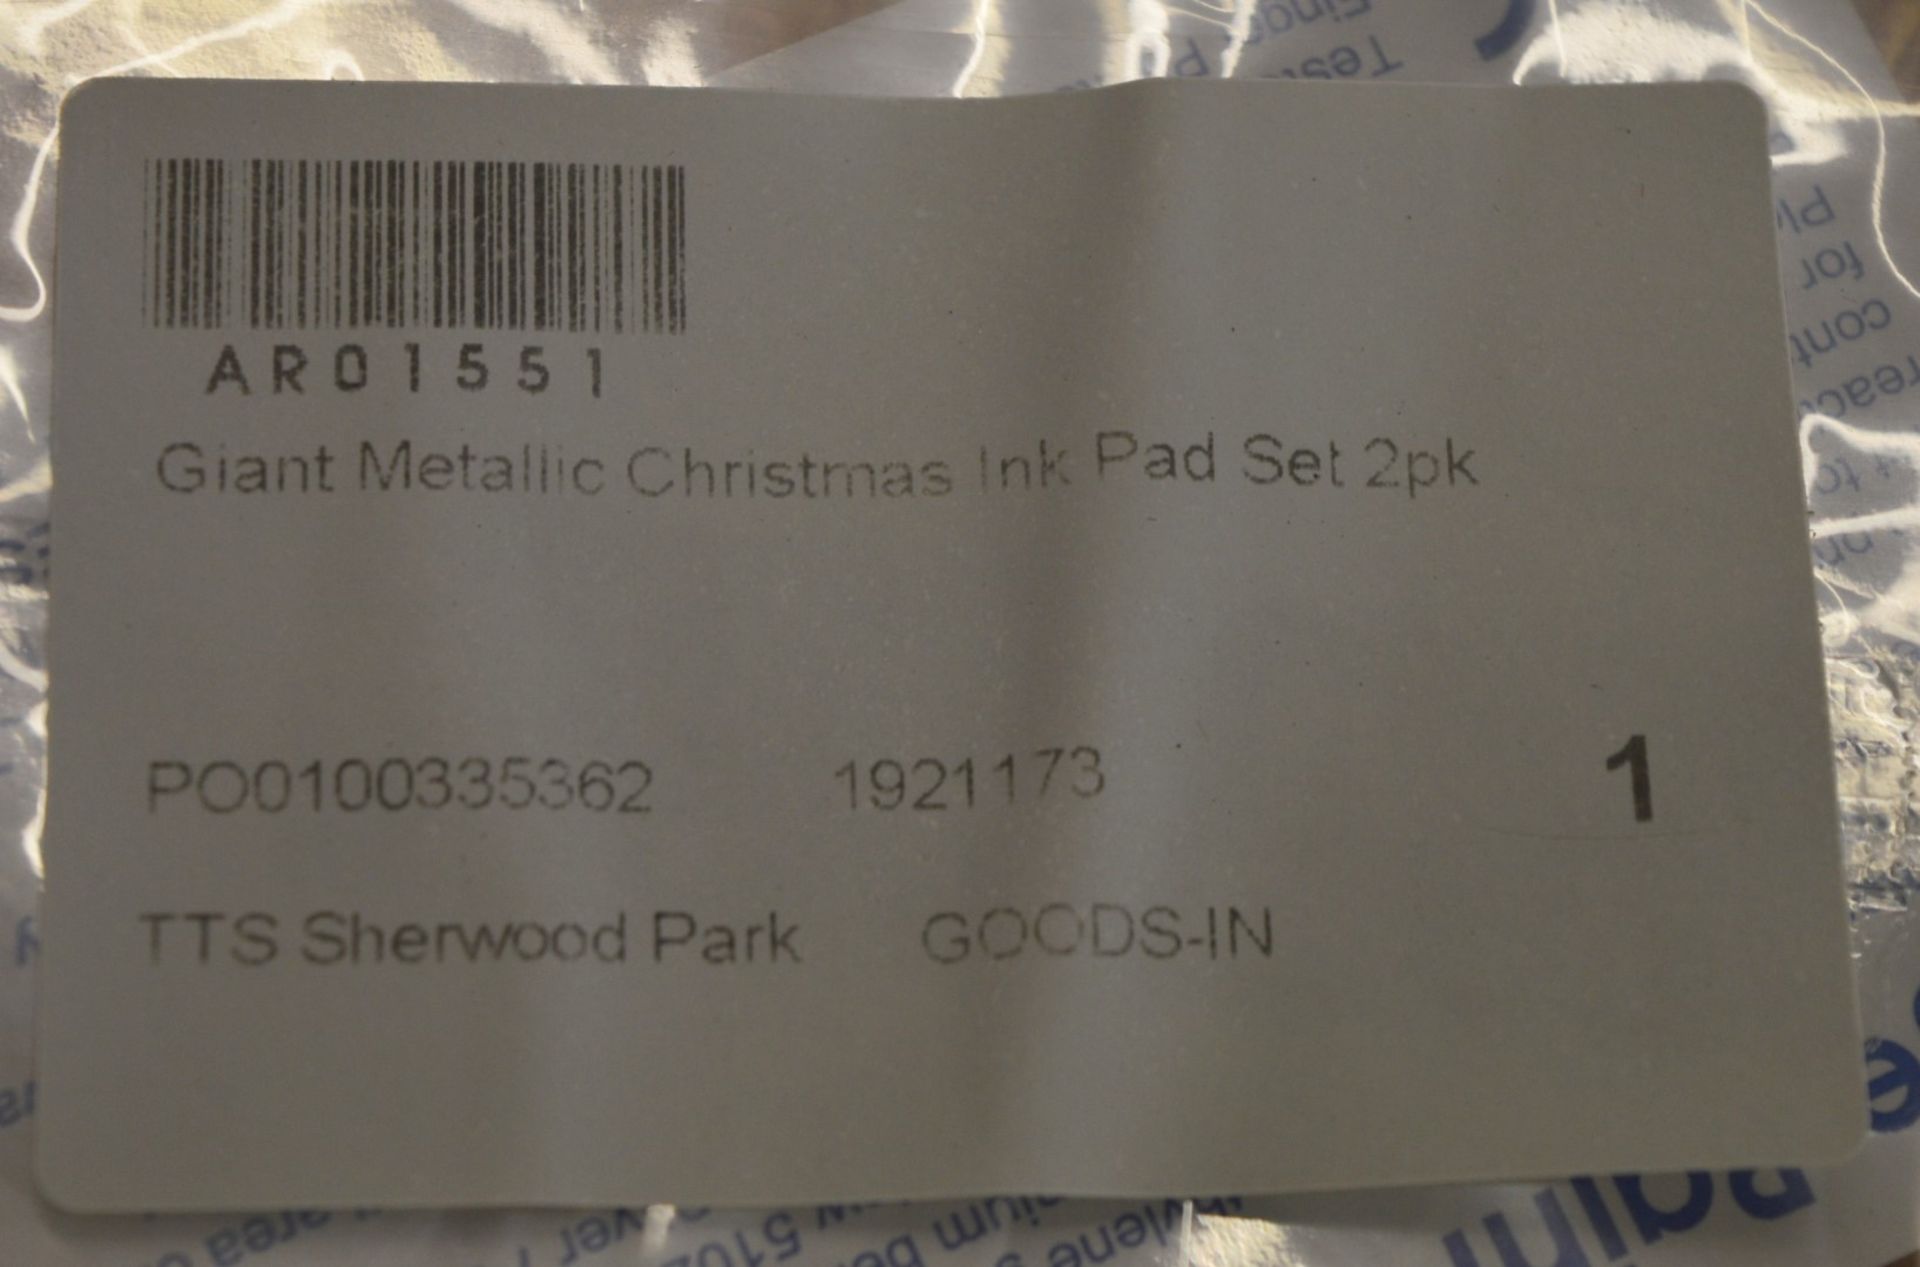 48 x Giant Metallic Christmas Ink Pad Set - 2 Pads Per Set - CL185 - Brand New Stock - Ref DRT0023 - - Image 5 of 5